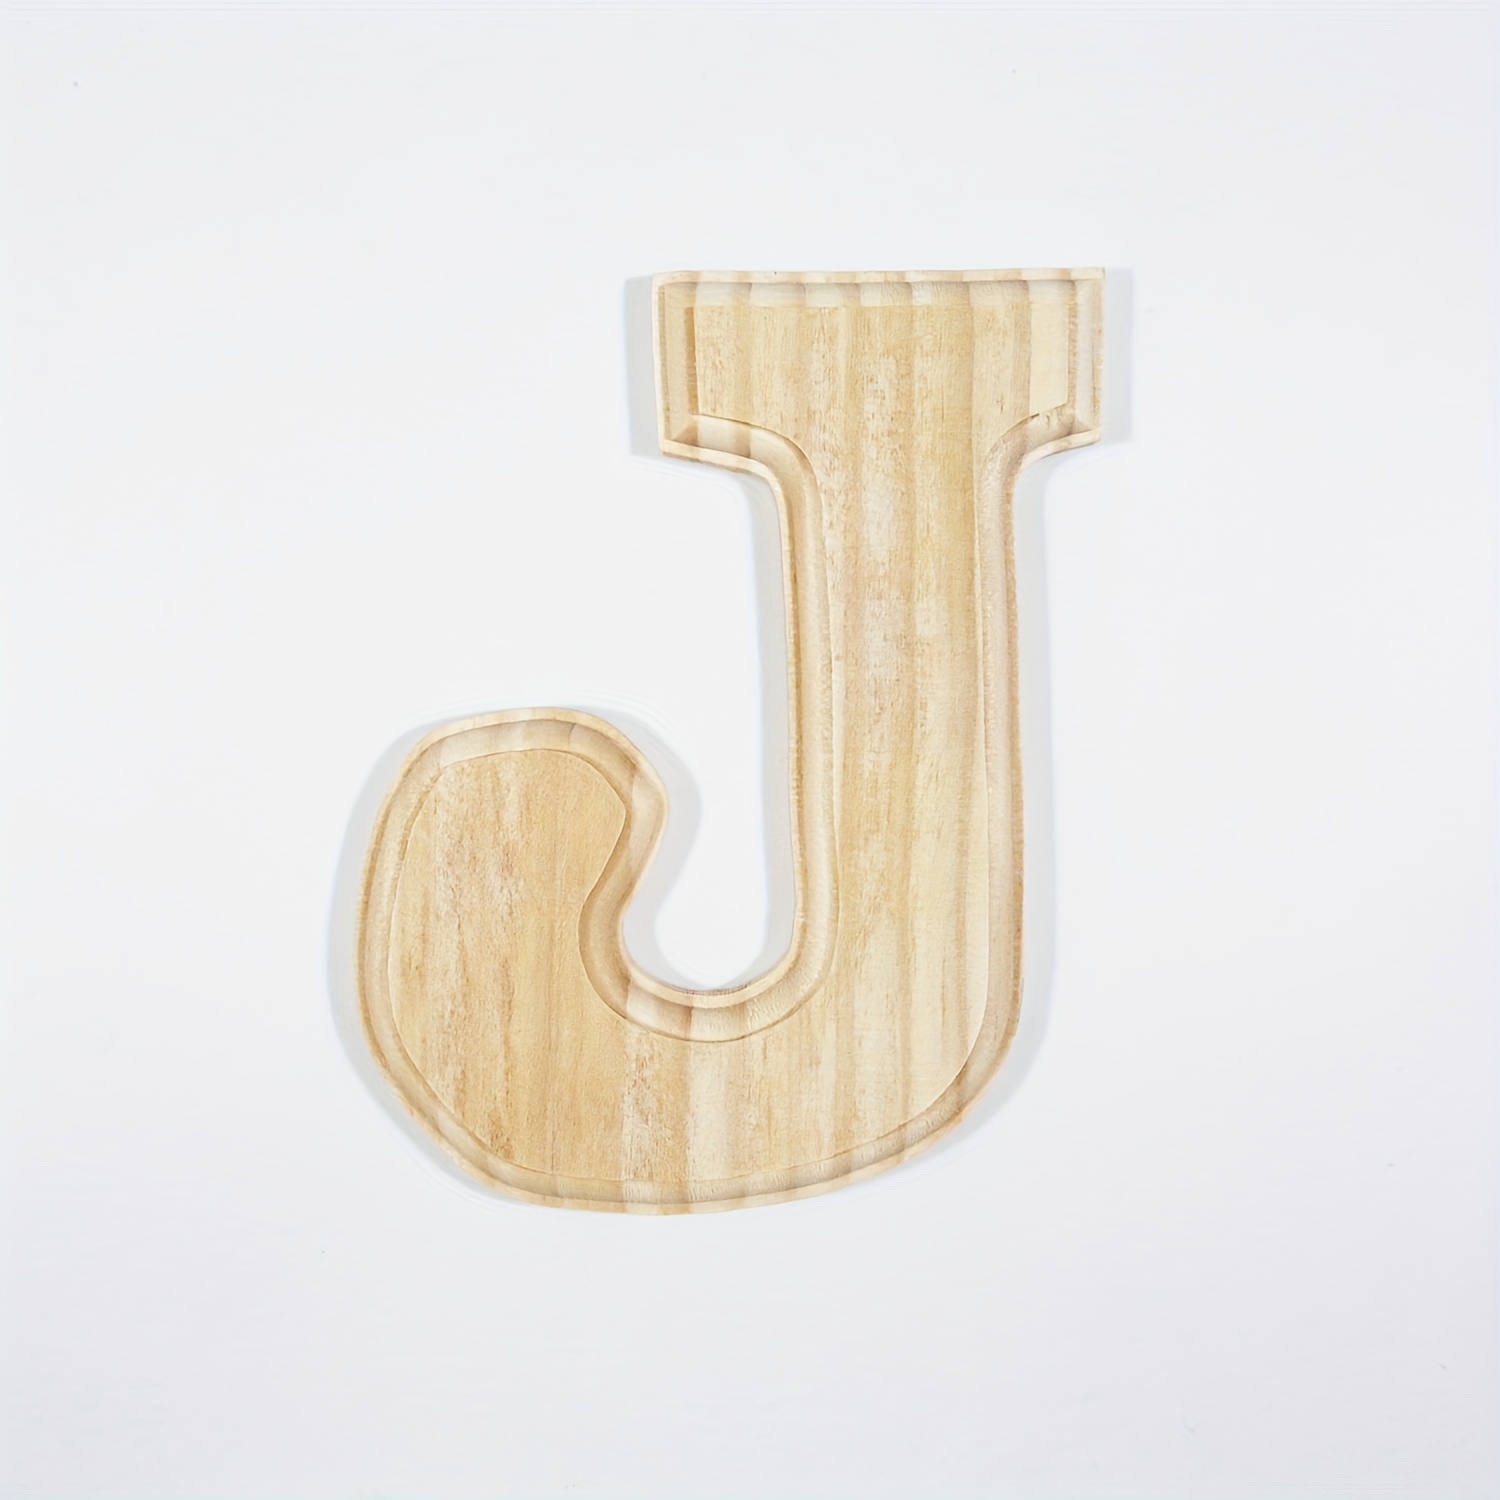 AOCEAN Letras de madera blanca de 4 pulgadas, letras de madera sin terminar  para decoración de pared, letras decorativas de pie, rebanadas, decoración